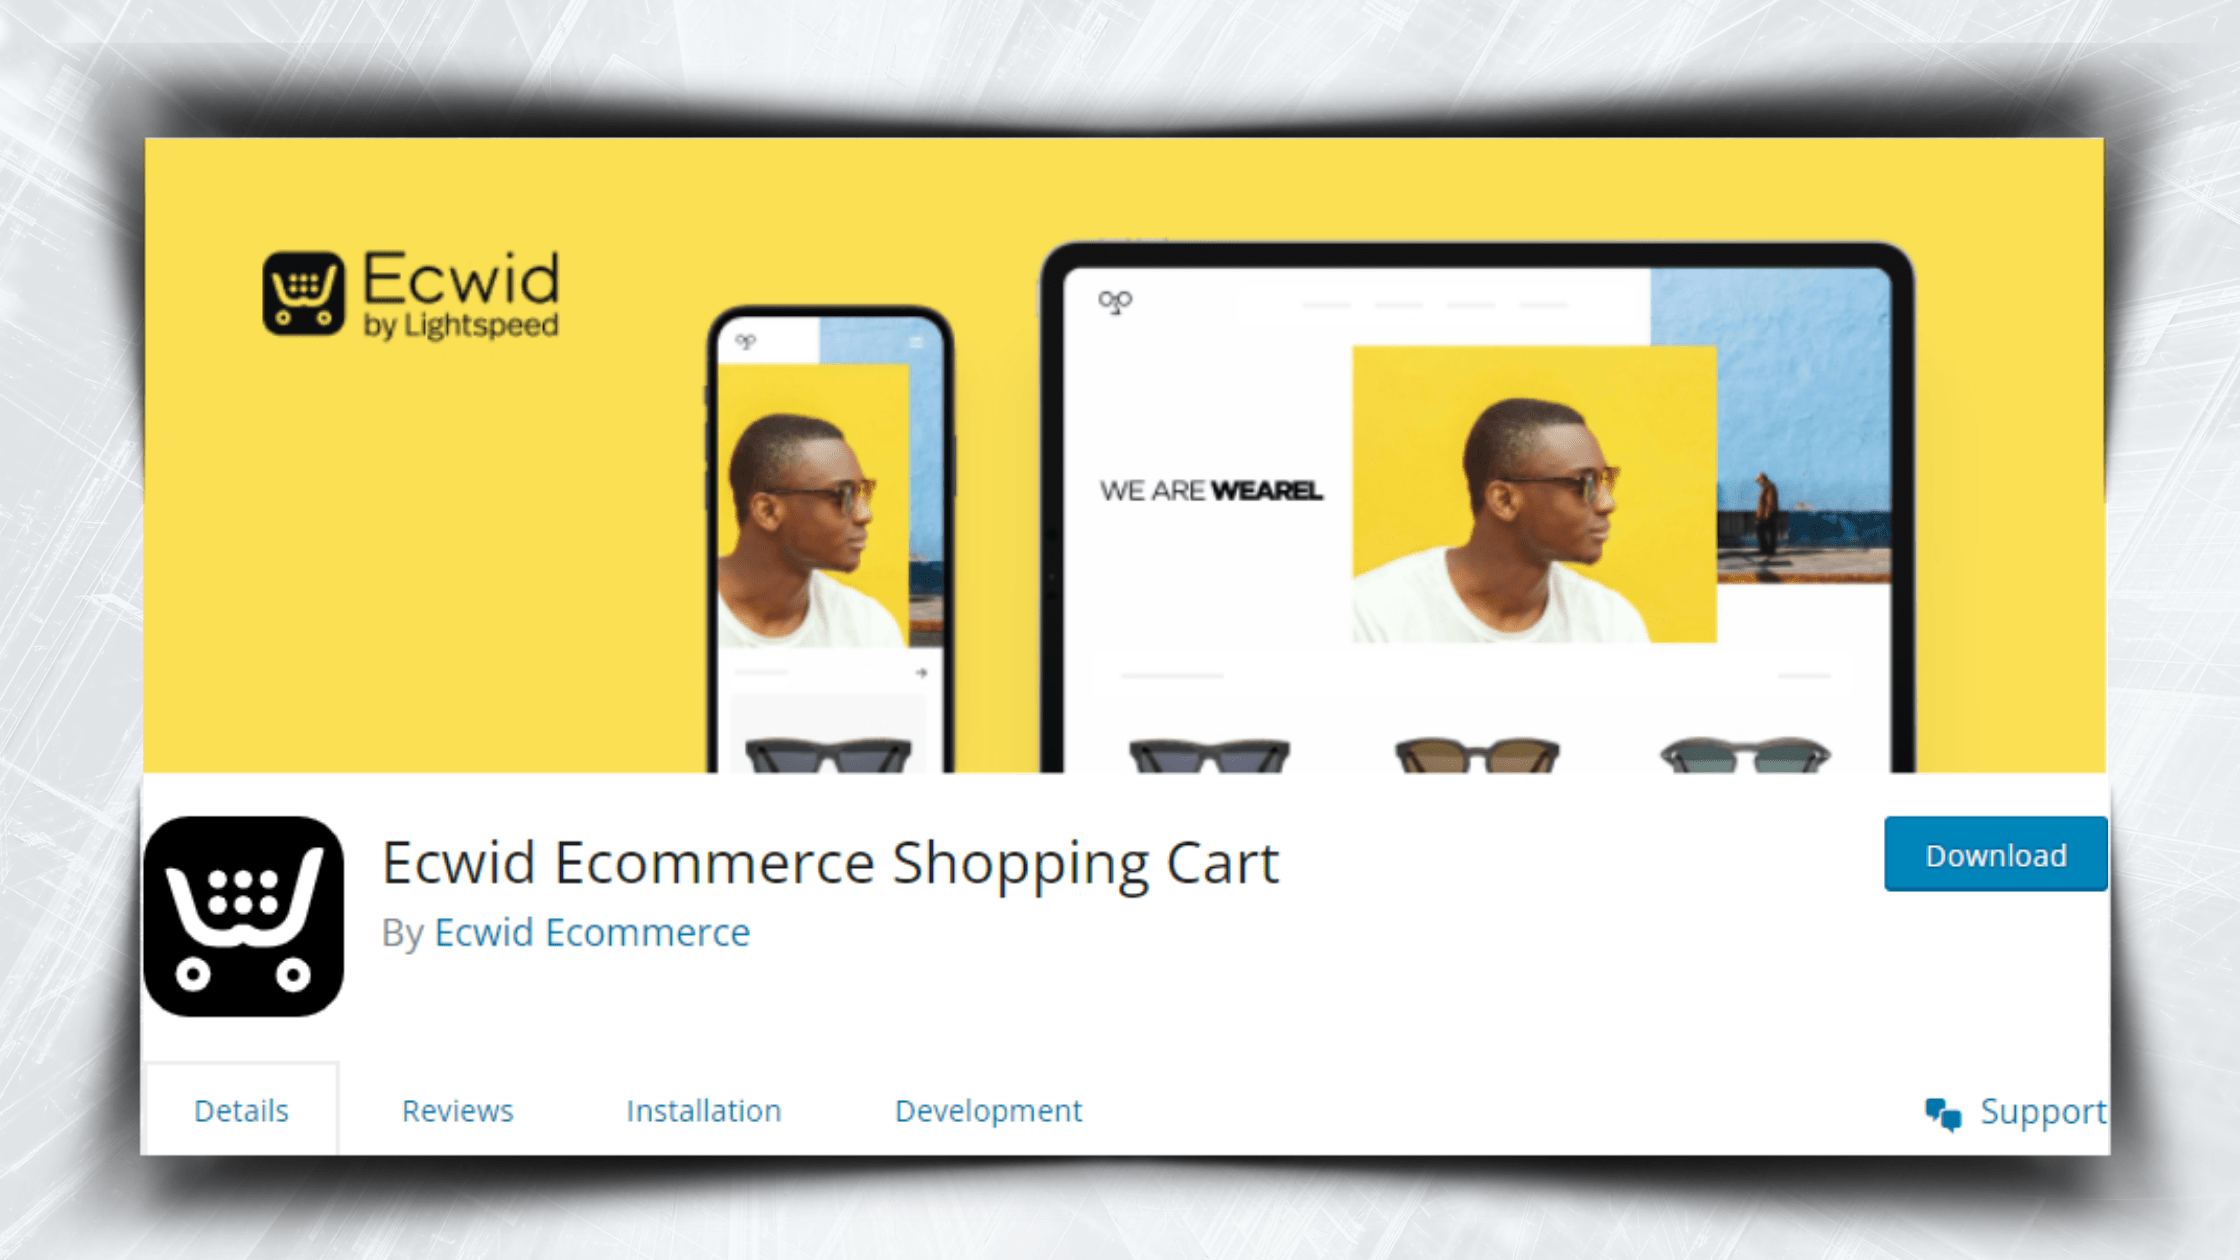 Ecwid Ecommerce Shopping Cart